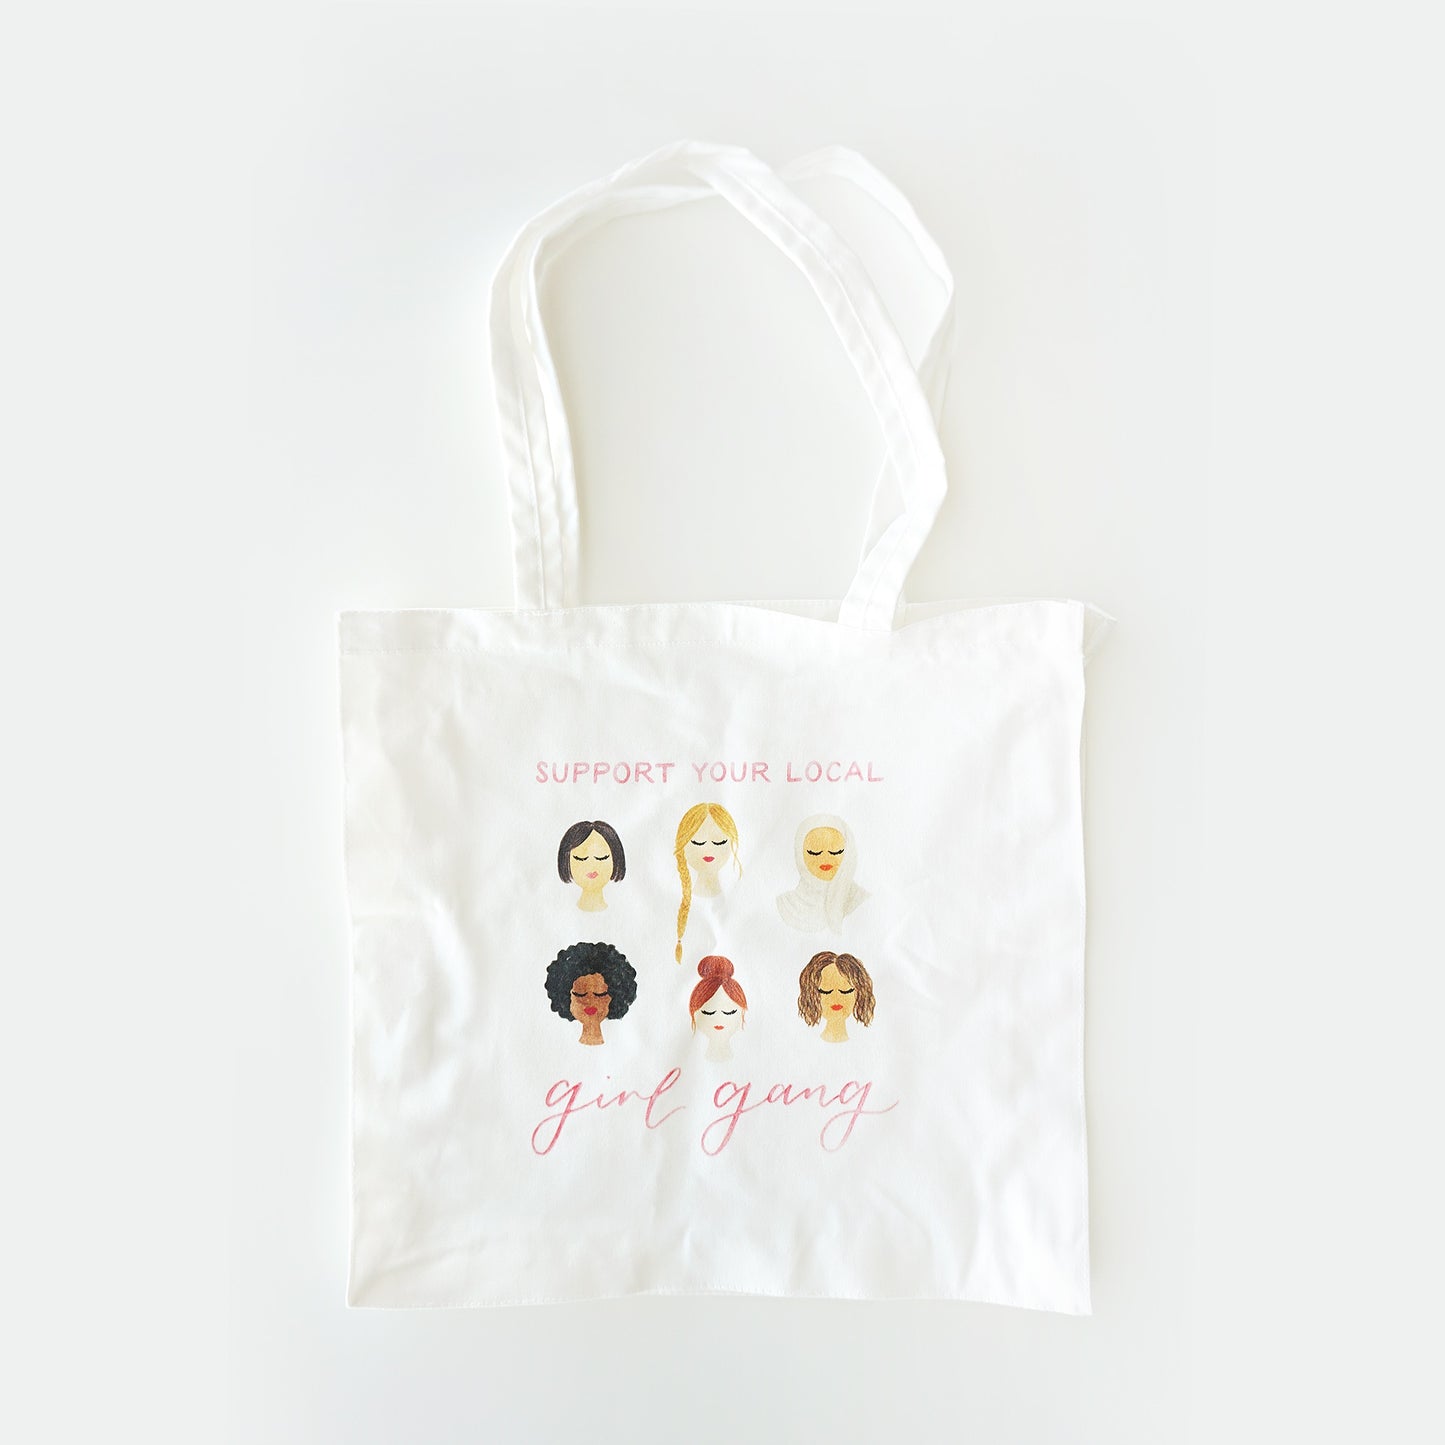 Girl Gang Canvas Tote Bag